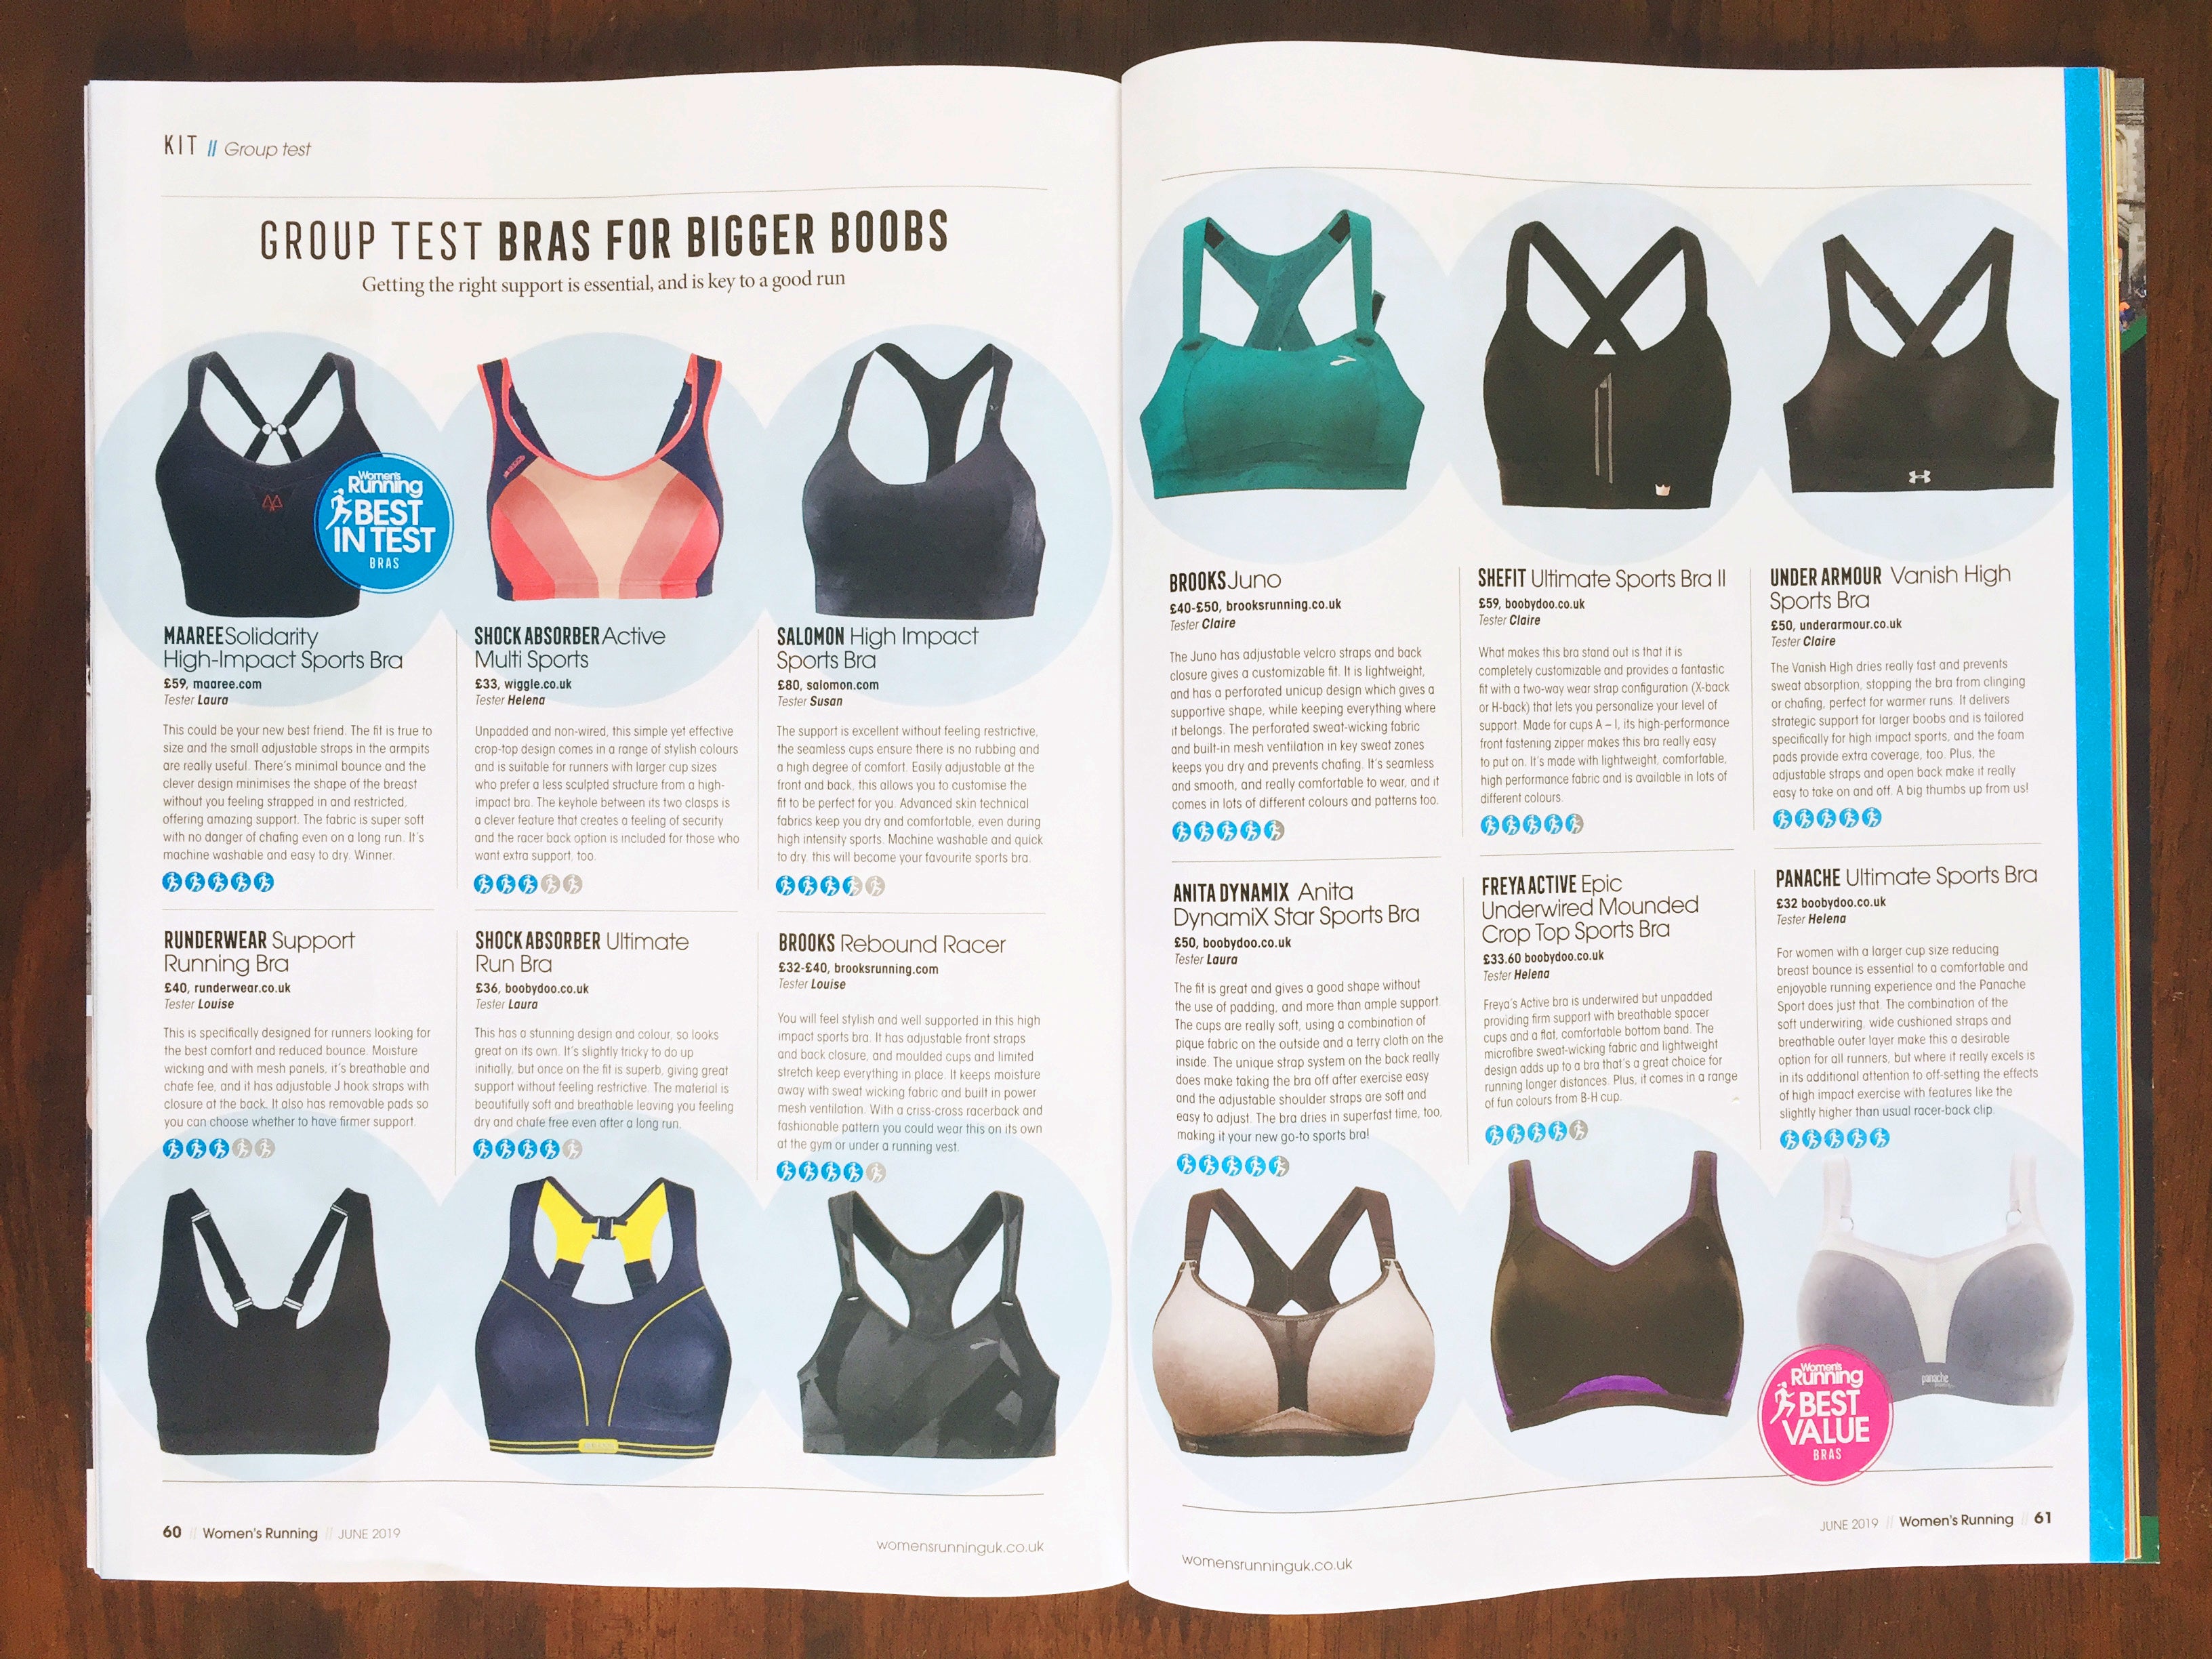 Women's Running Magazine Sports Bra review for big boobs